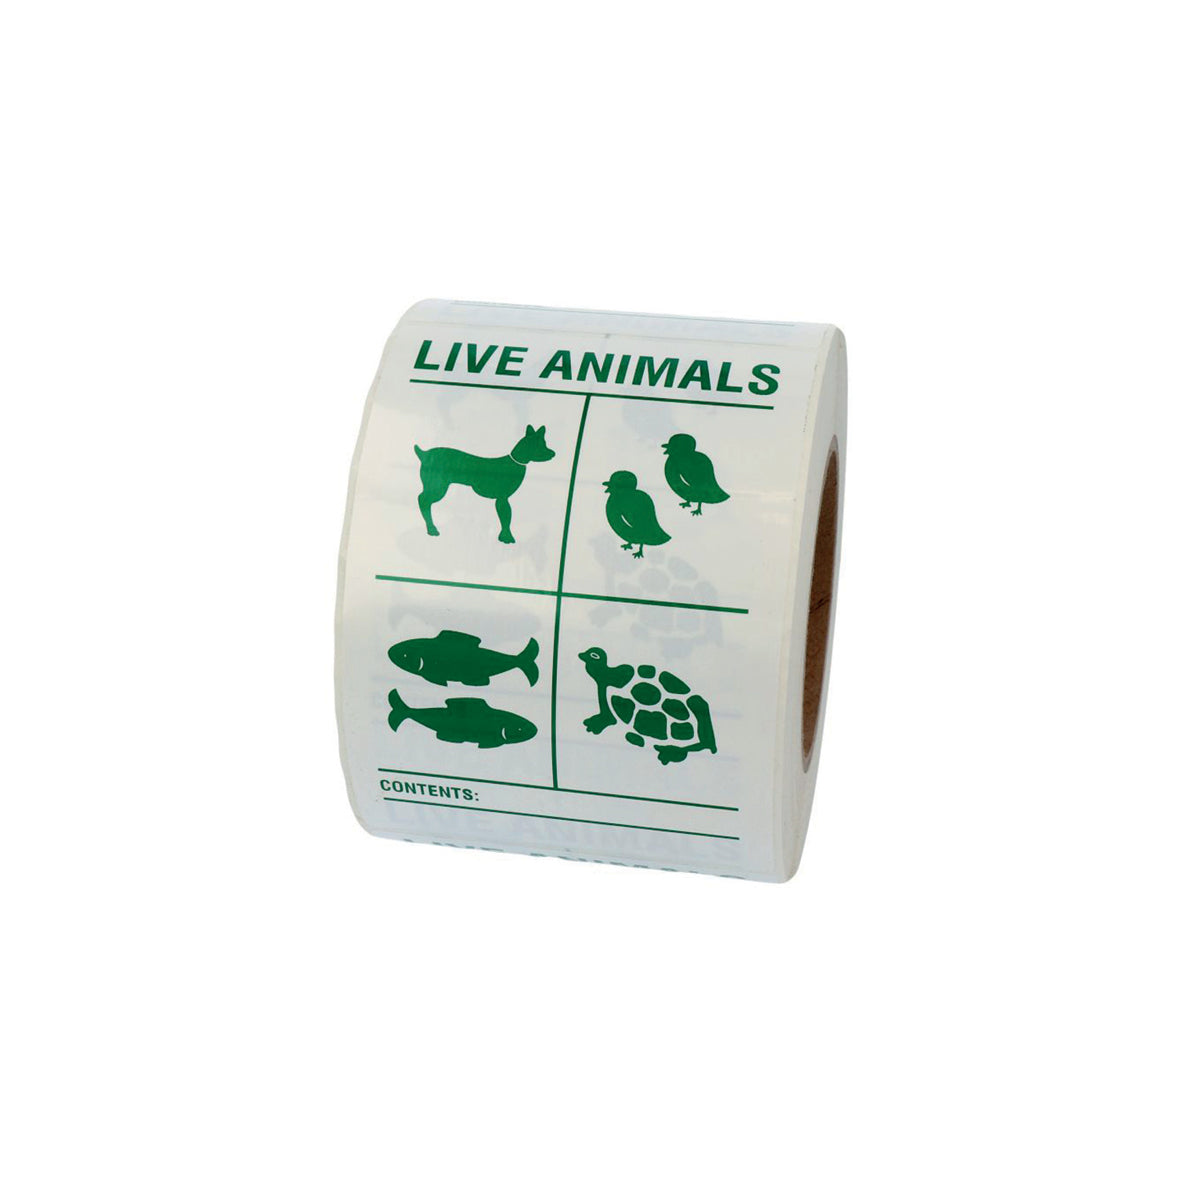 Gefahrgut div, 5.0328, Live animals, 5.0325, 100 x 150 mm, FO, Ro zu 500 Stk.